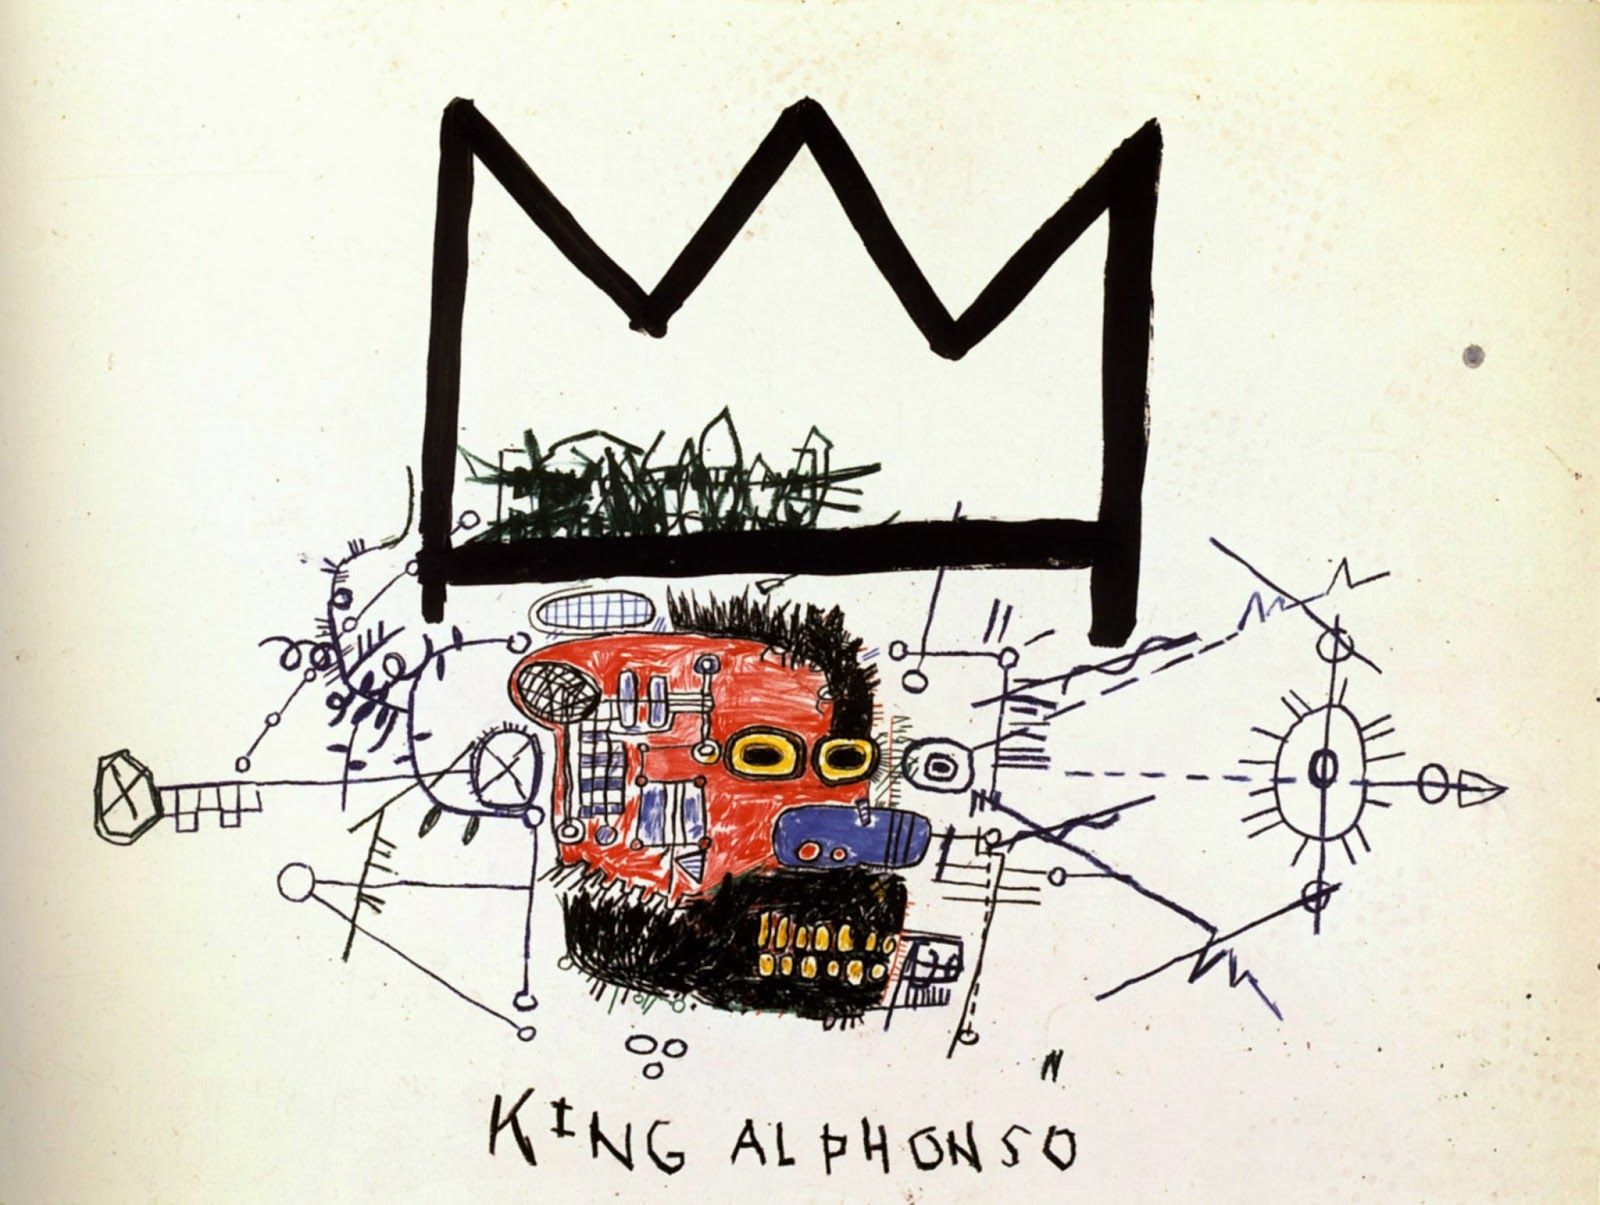 Free download Jean Michel Basquiat Wallpaper Posters Paintings Pictures  1276x1500 for your Desktop Mobile  Tablet  Explore 71 Basquiat  Wallpaper 